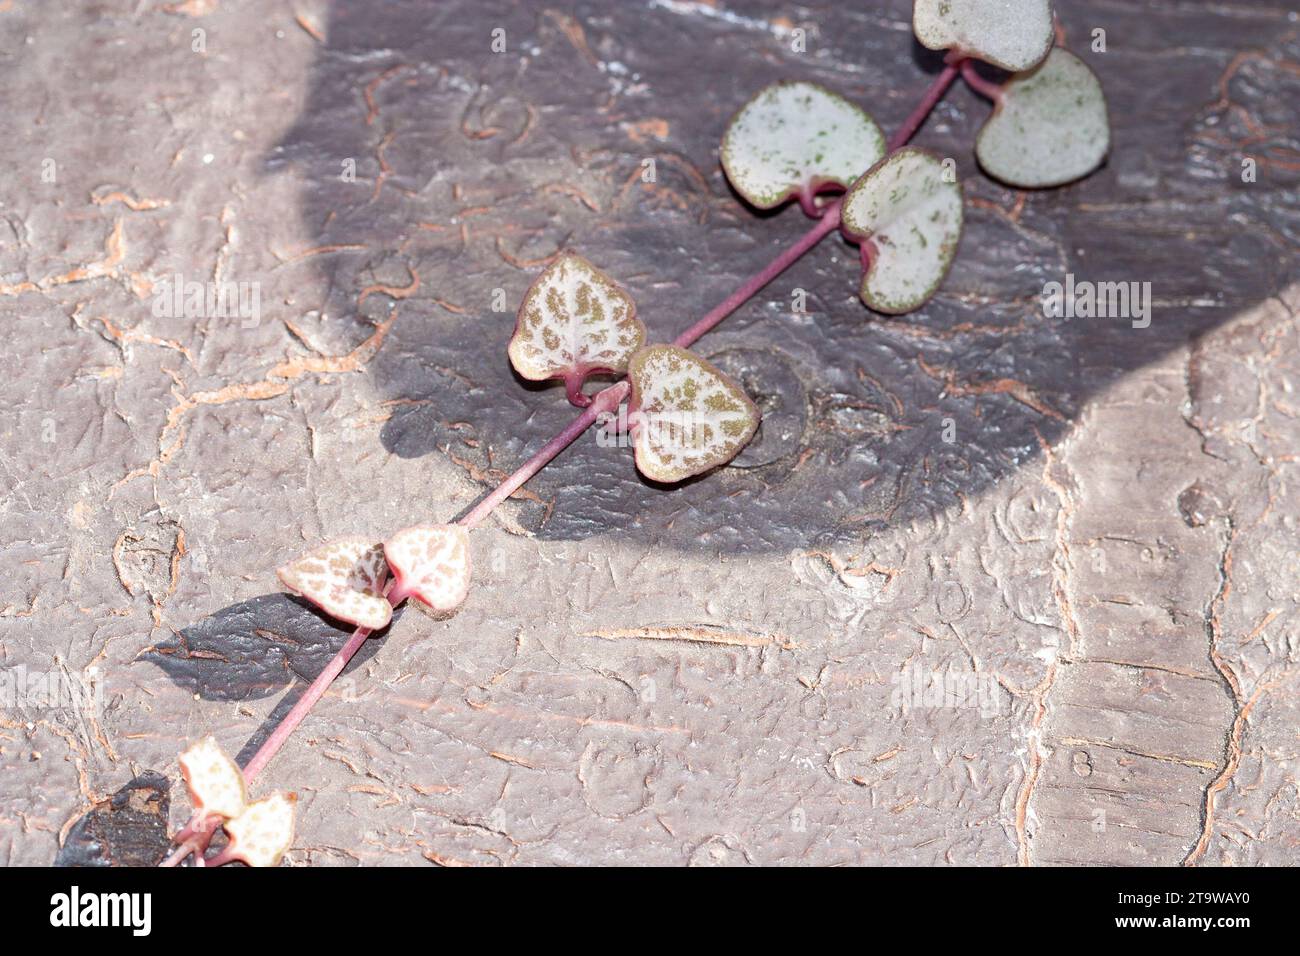 String of hearts, Ceropegia Woodii variegata vine laing on the ground Stock Photo